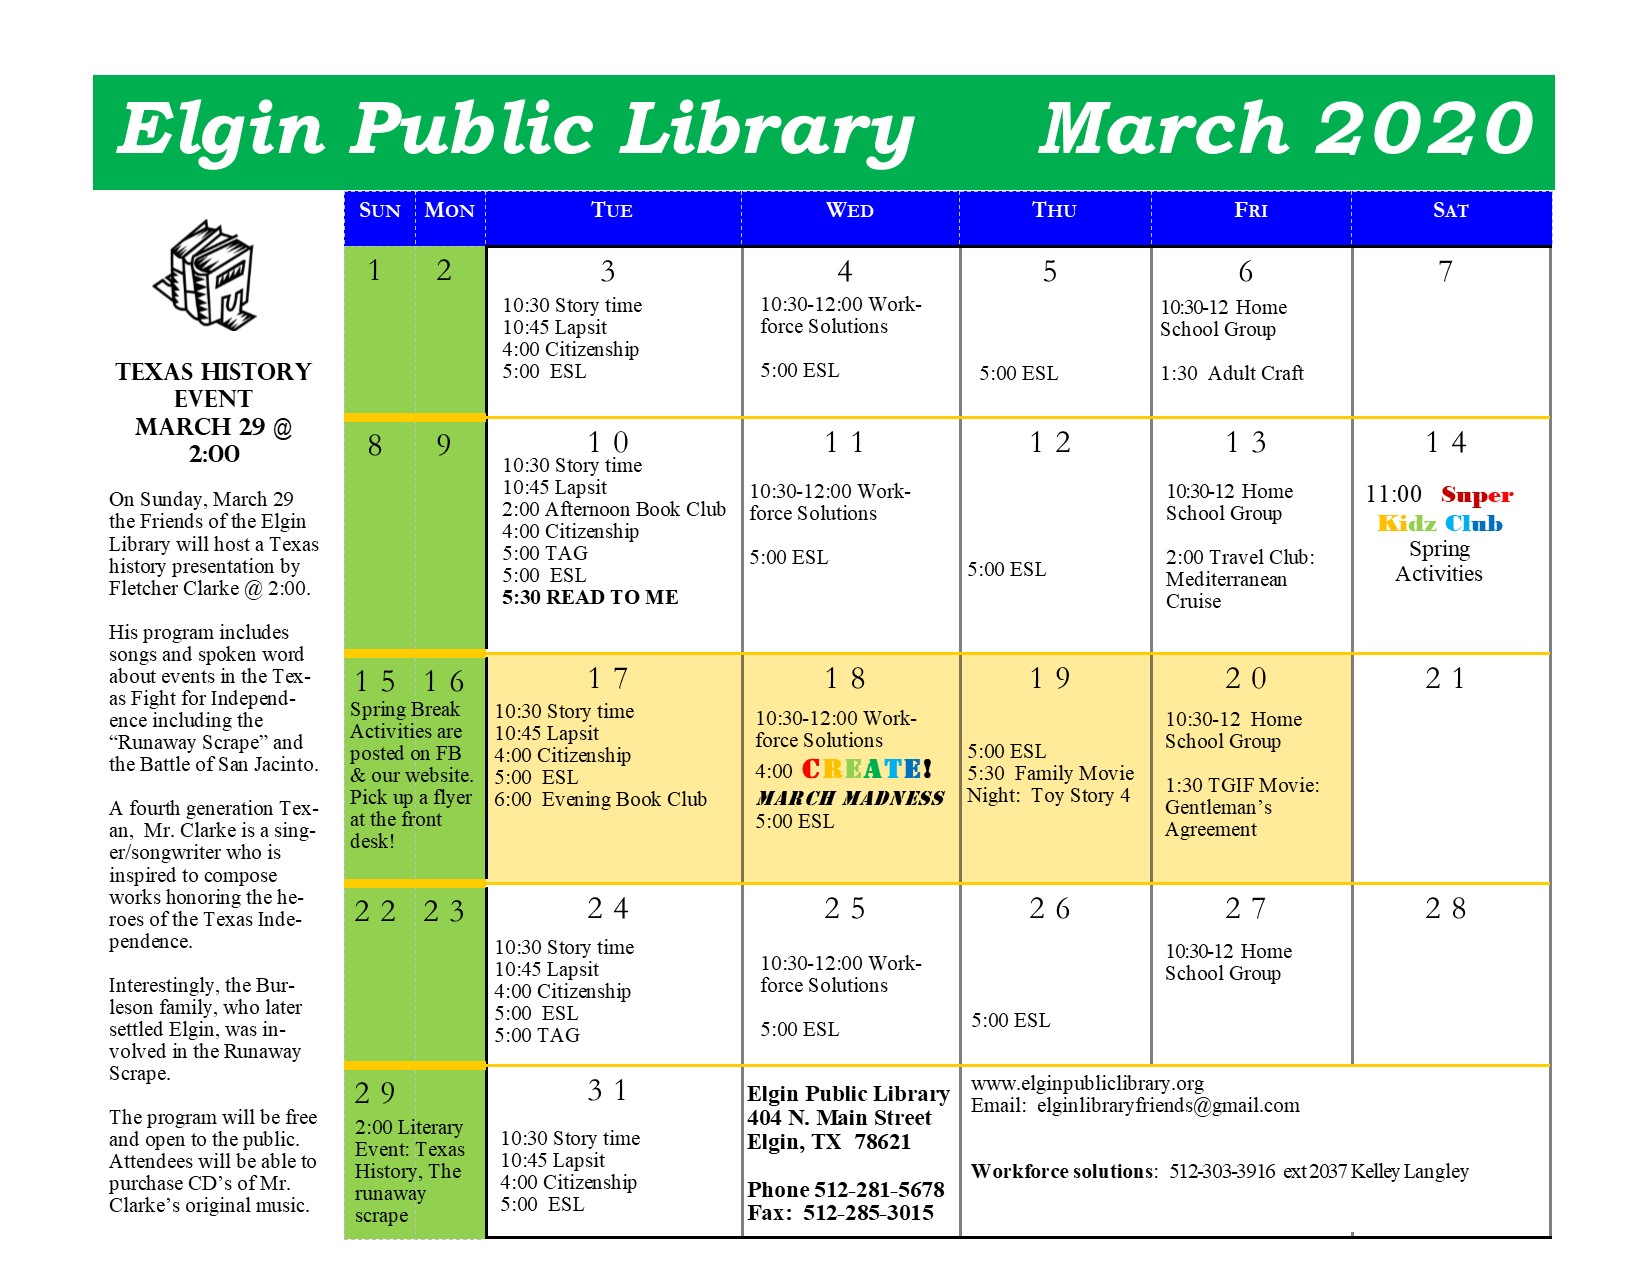 EPL Mar 2020 Calendar.jpg